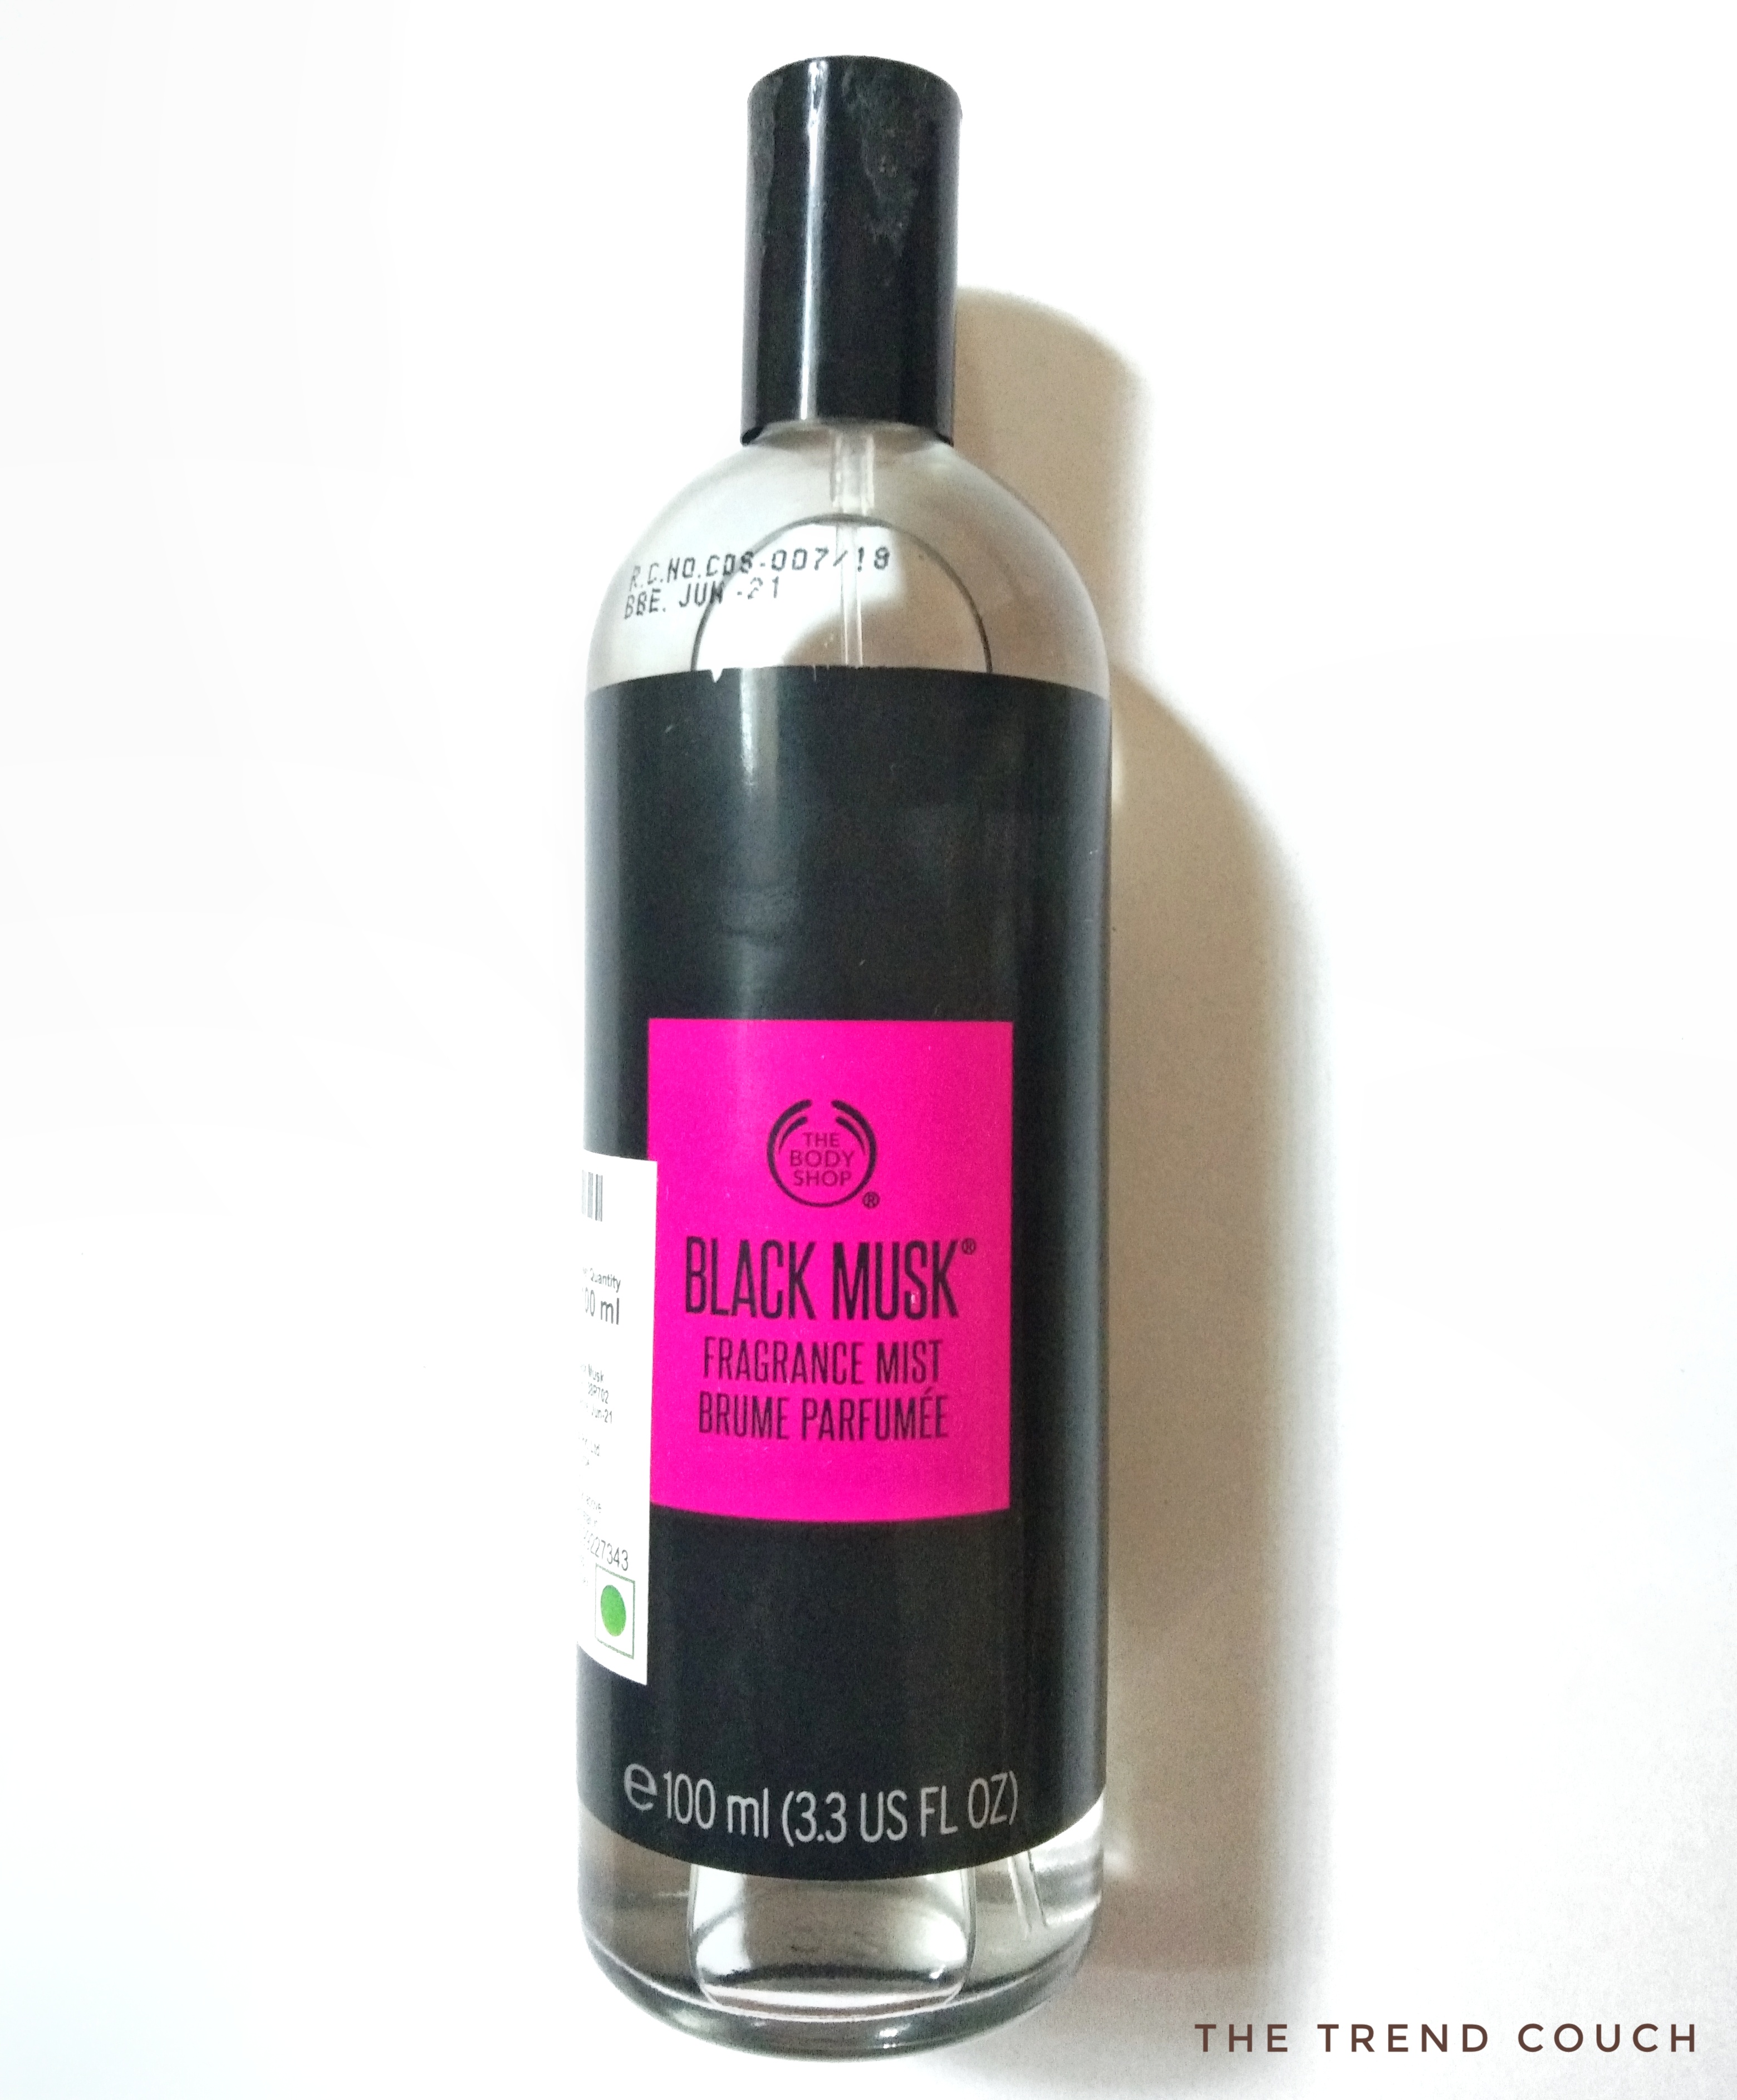 The Body Shop Black Musk Fragrance Mist 